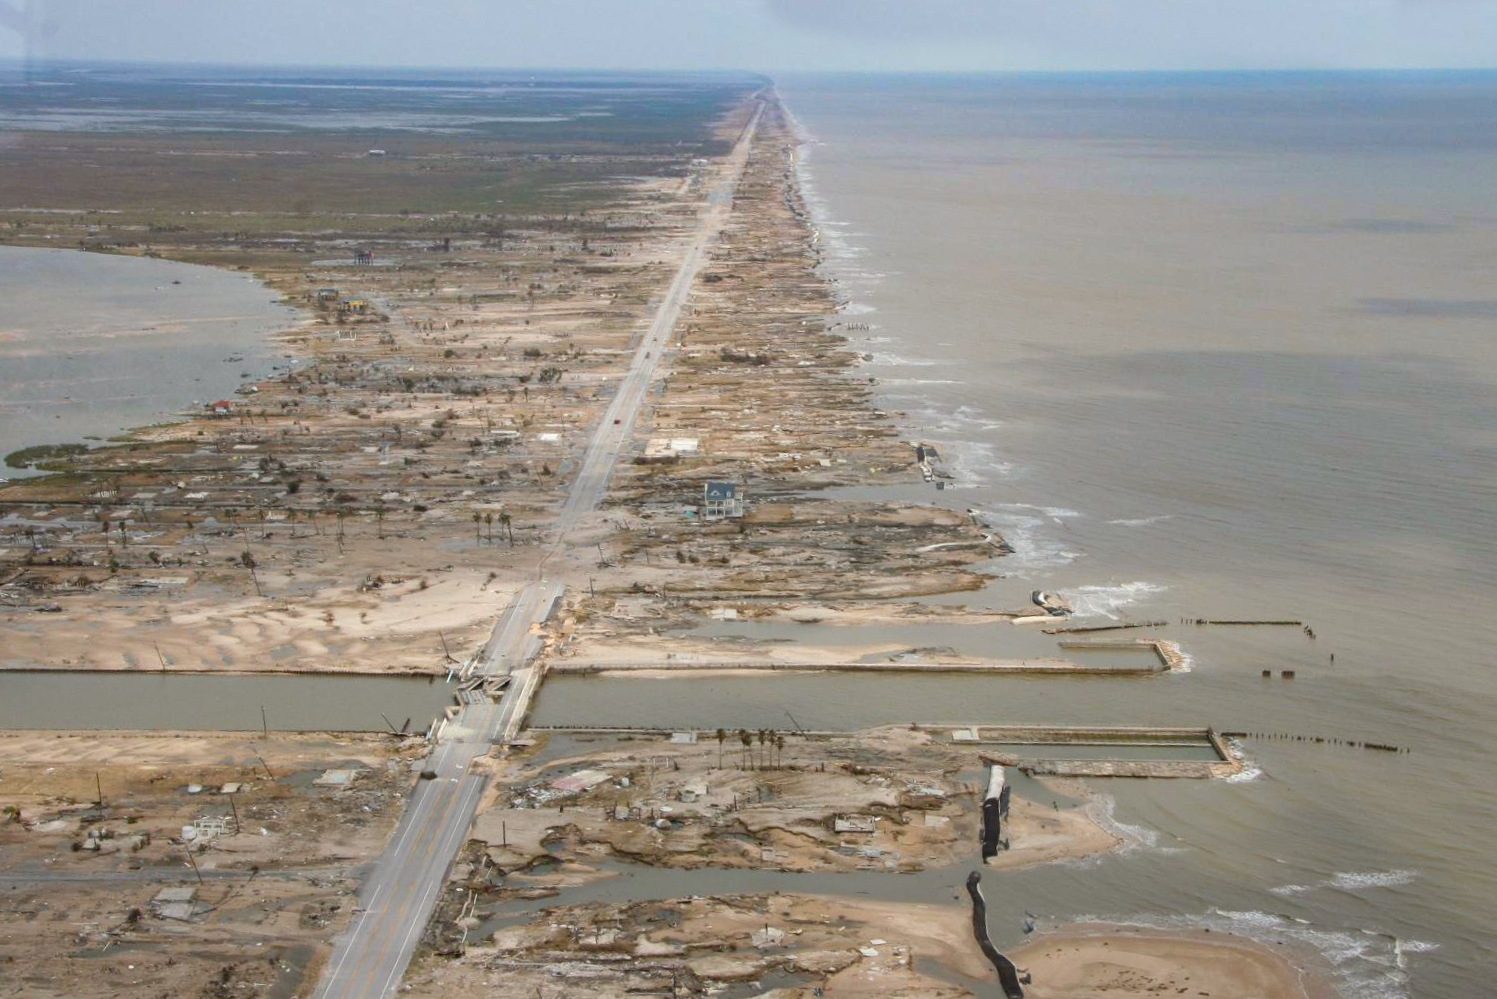 Bolivar Peninsula in the aftermath of Hurricane Ike.